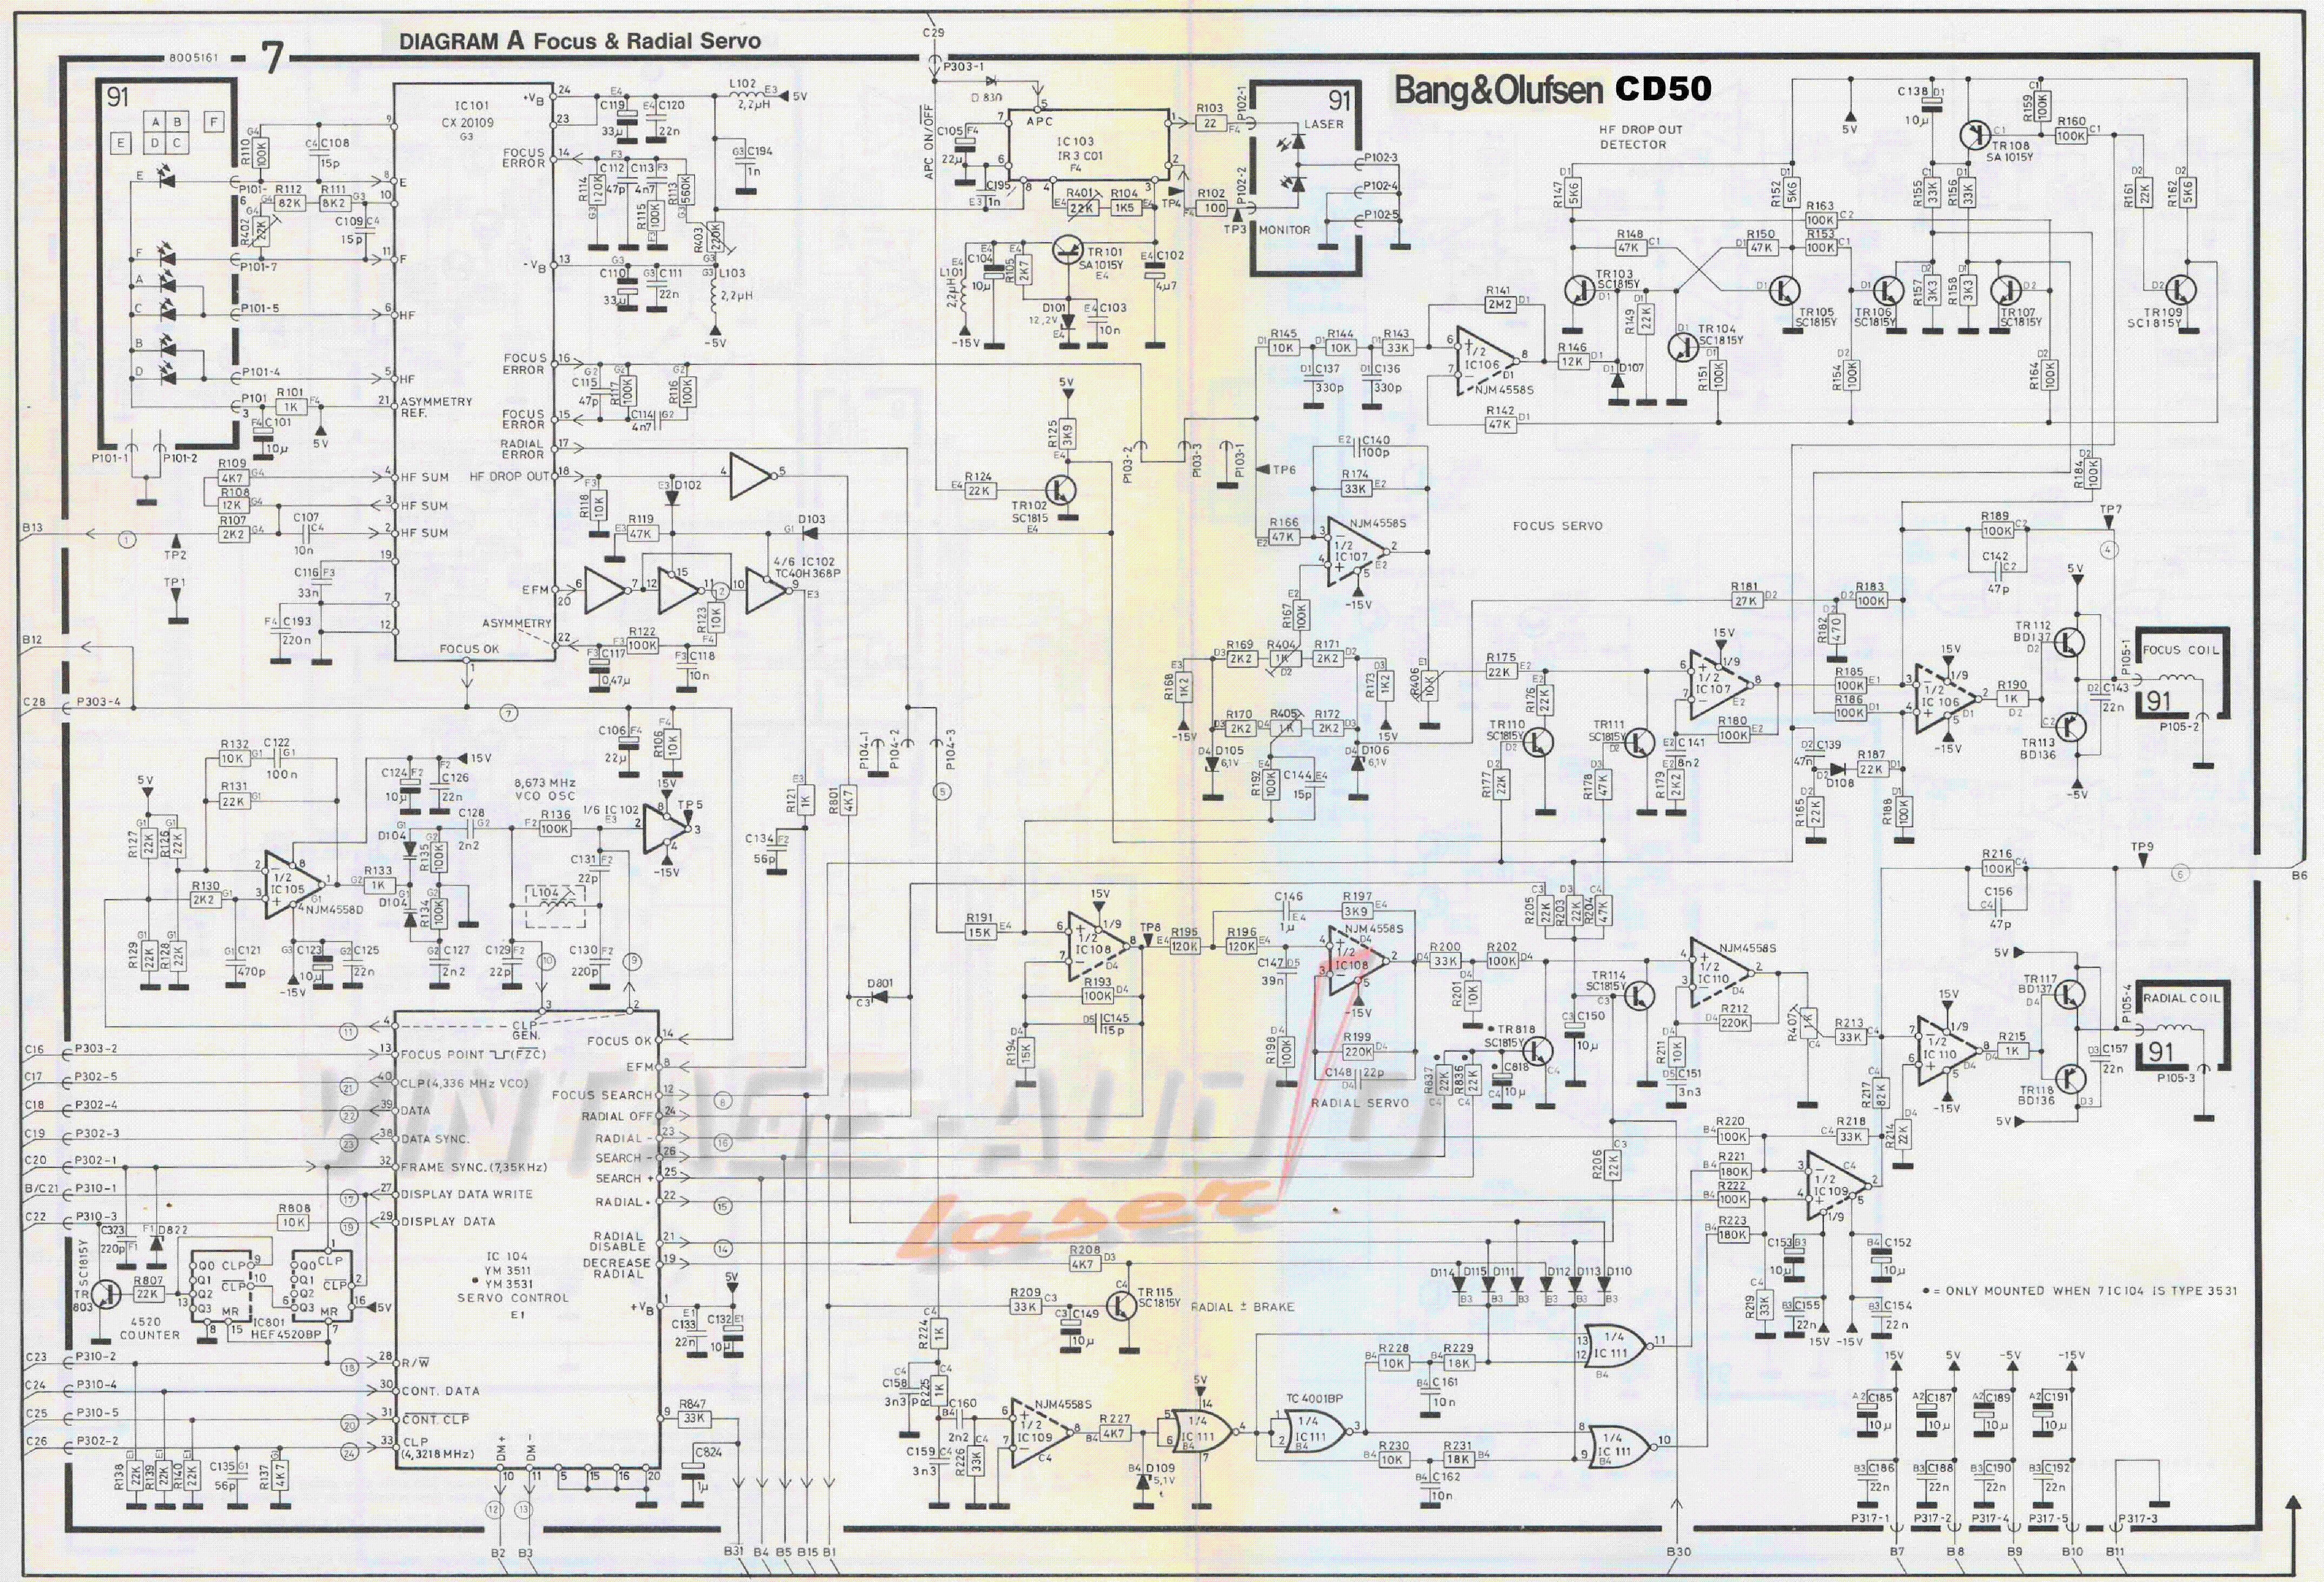 BANG-OLUFSEN CD50 SCH 1 Service Manual download, schematics, eeprom ...